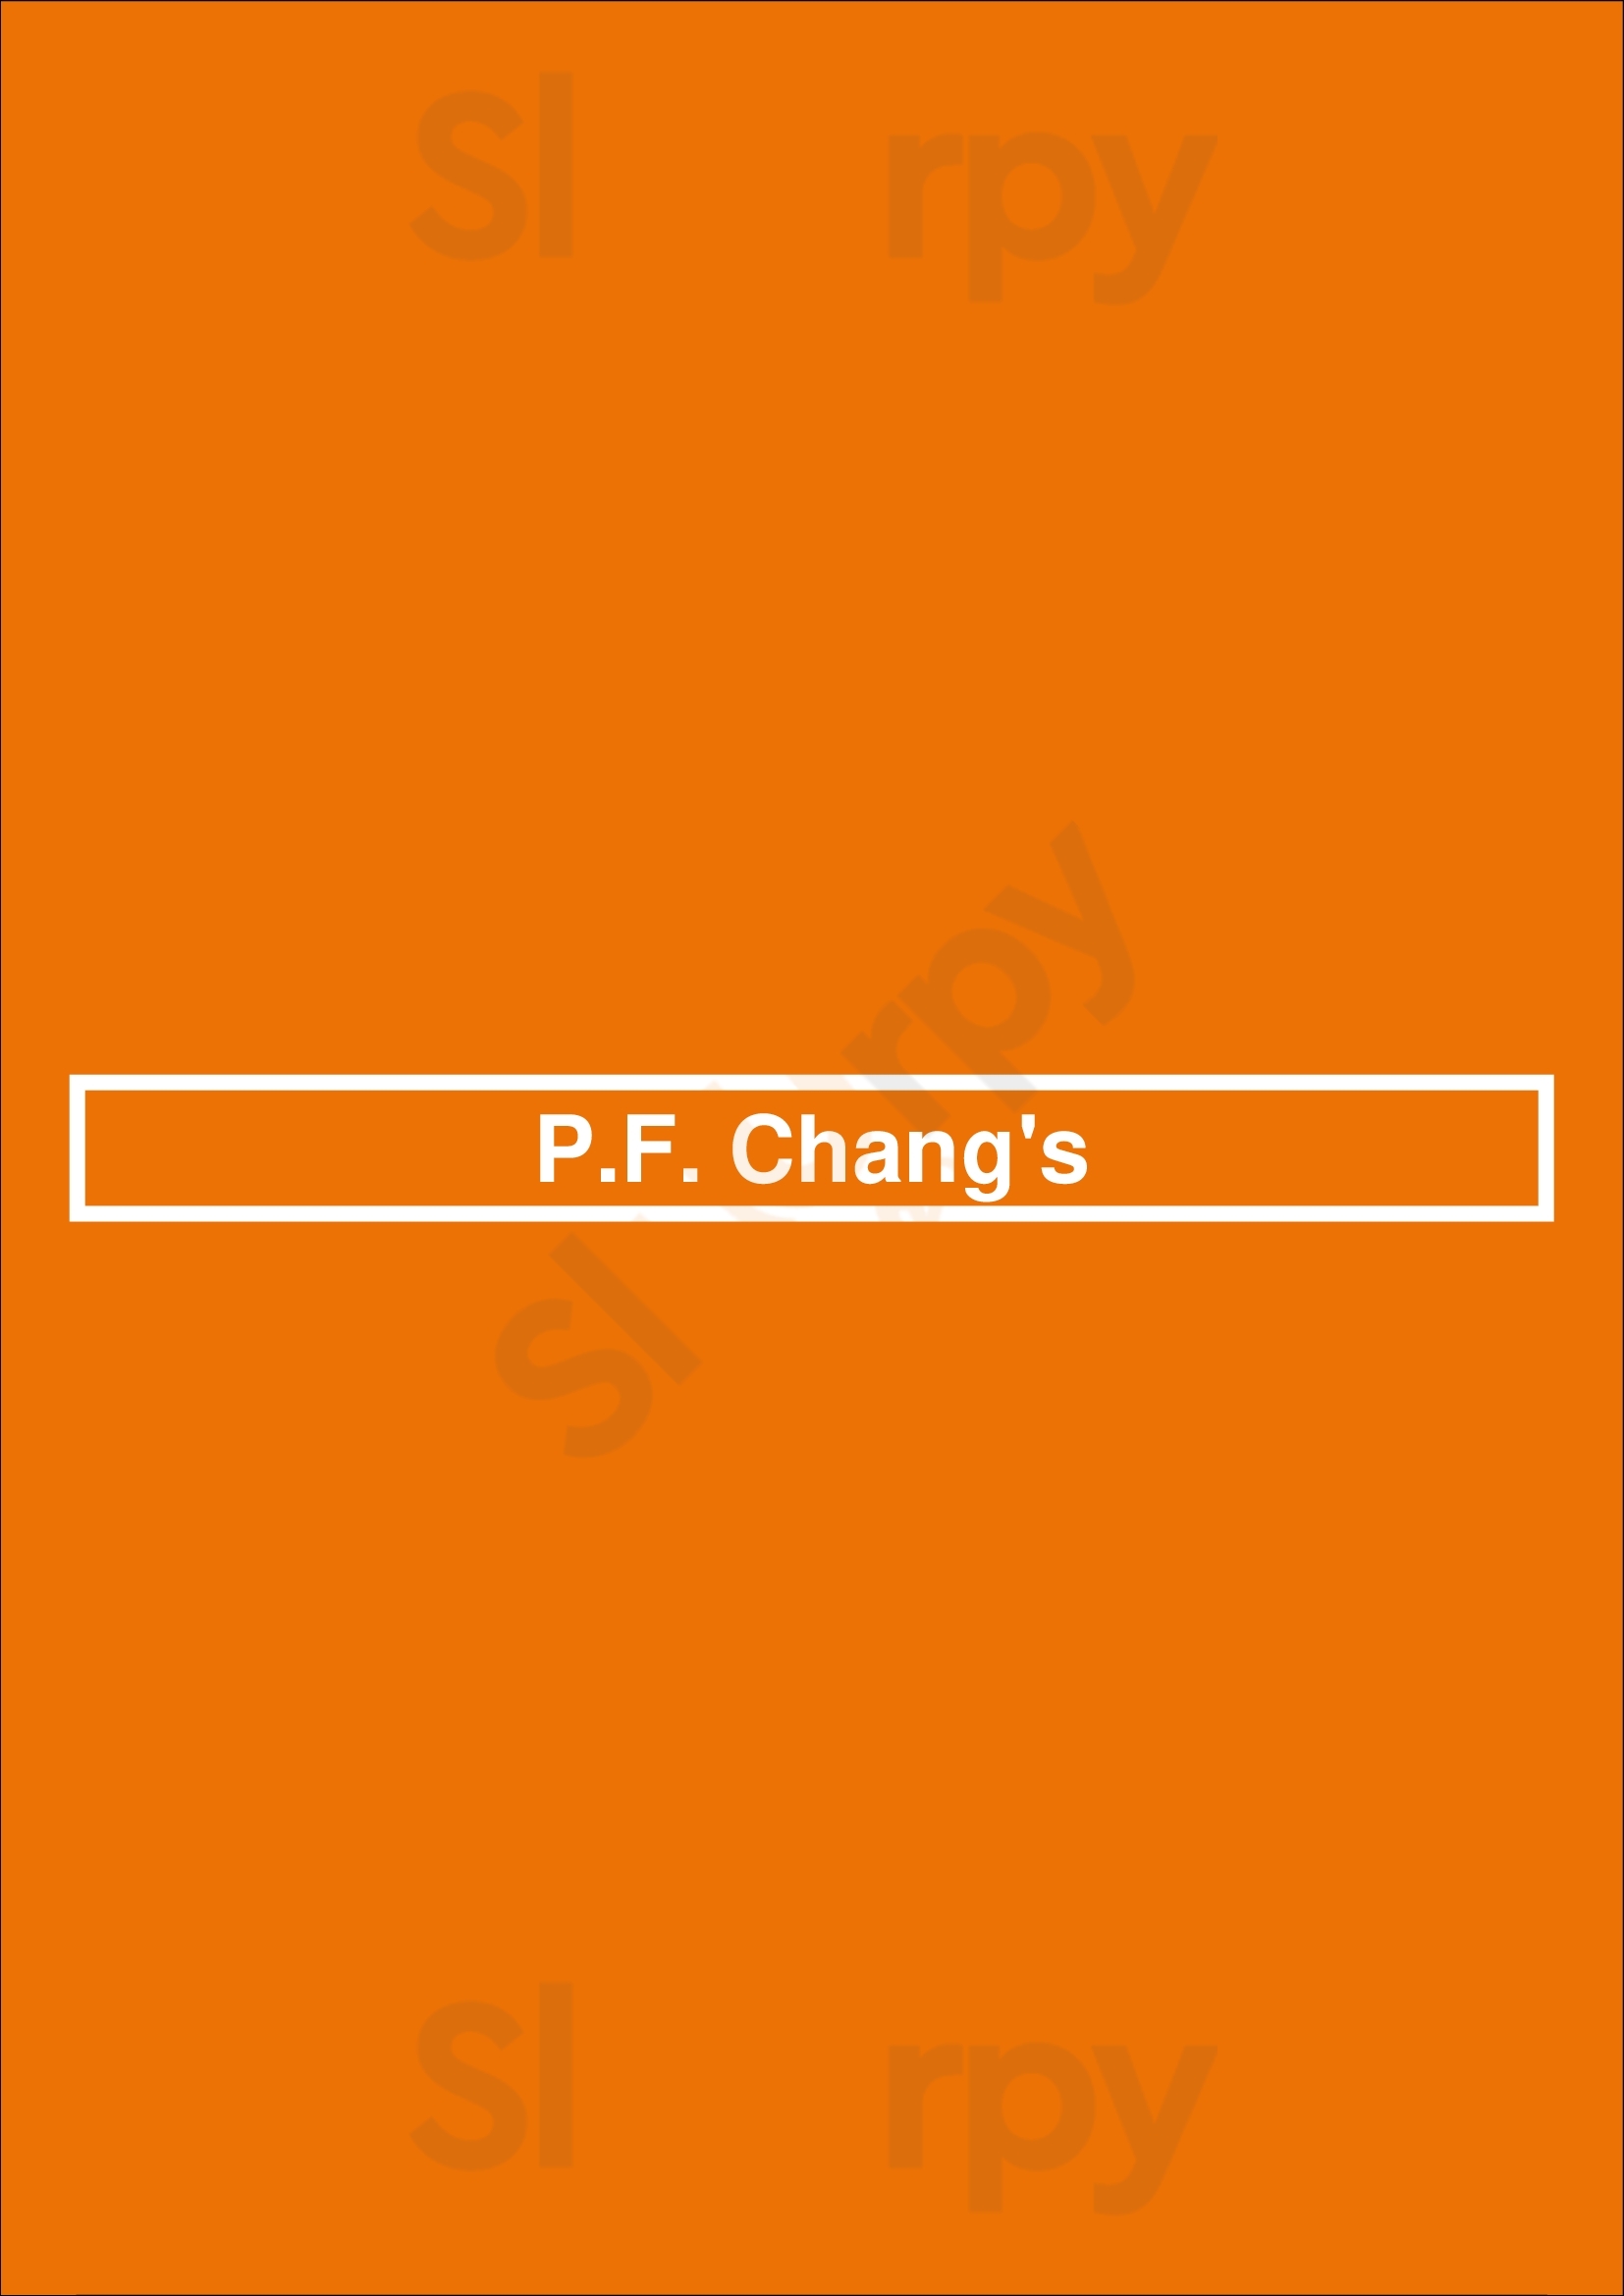 P.f. Chang's Wauwatosa Menu - 1